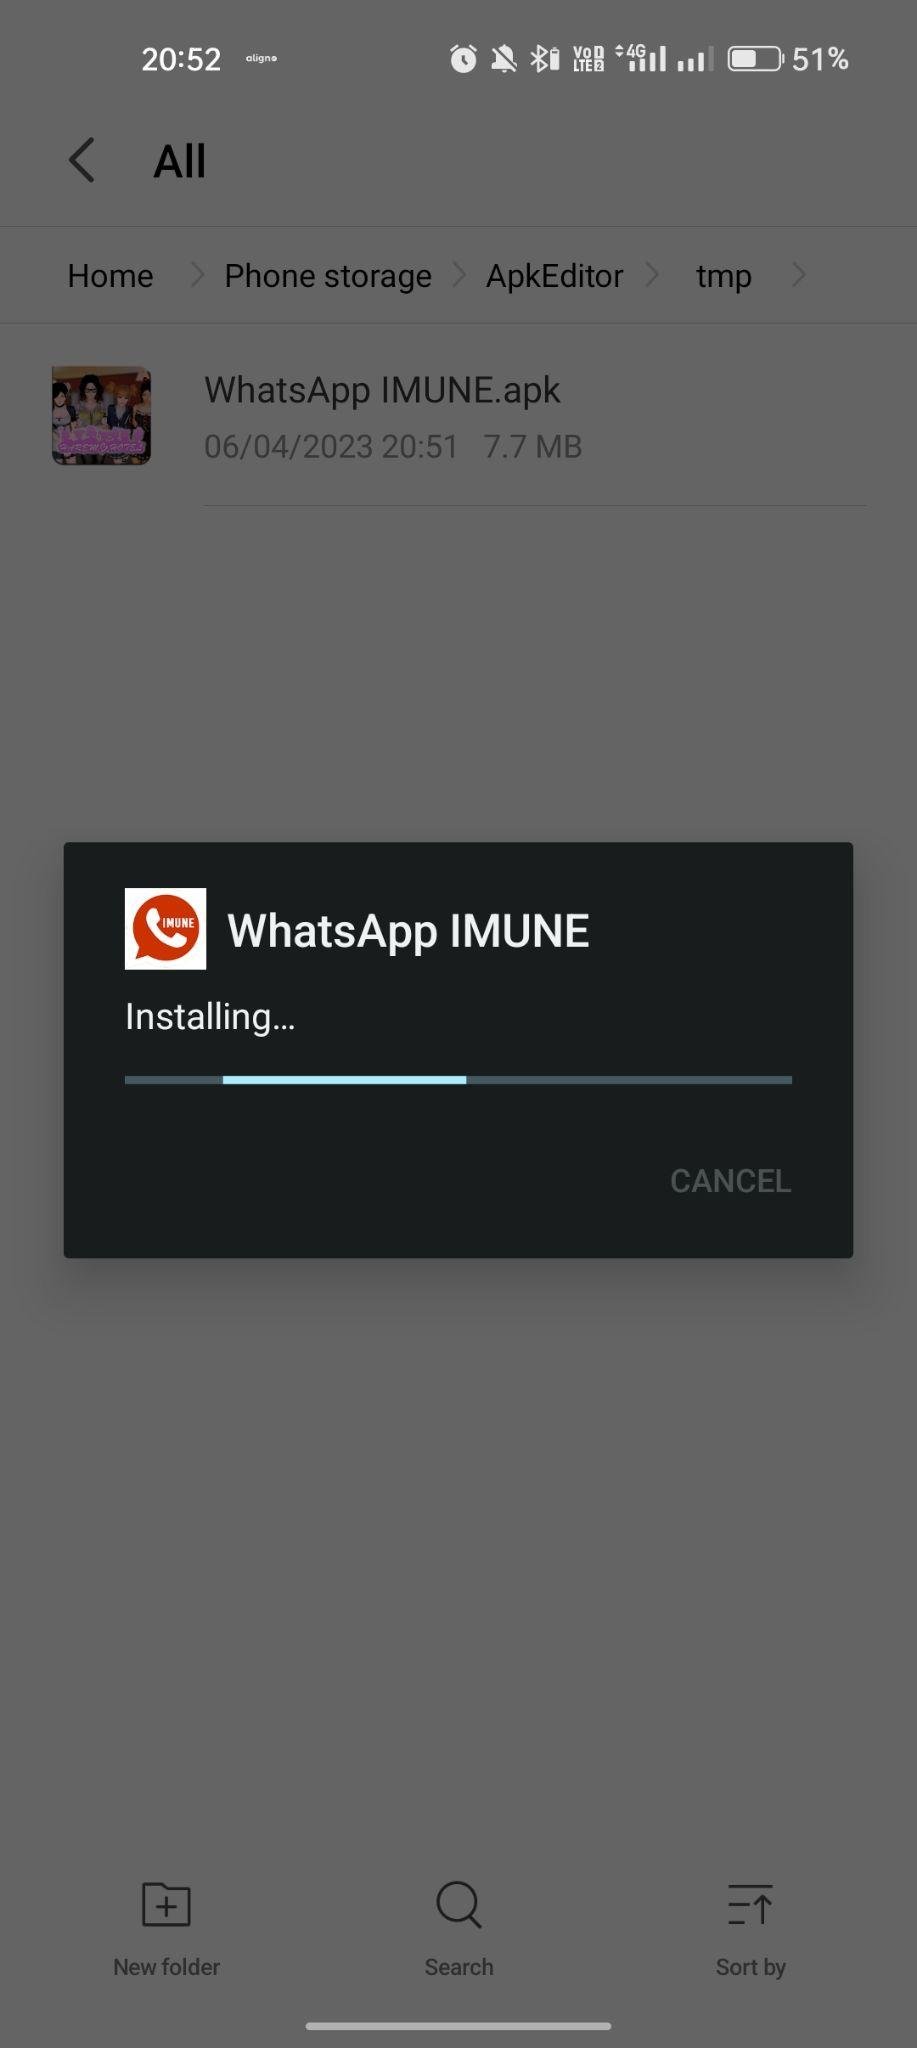 WhatsApp Imune apk installing